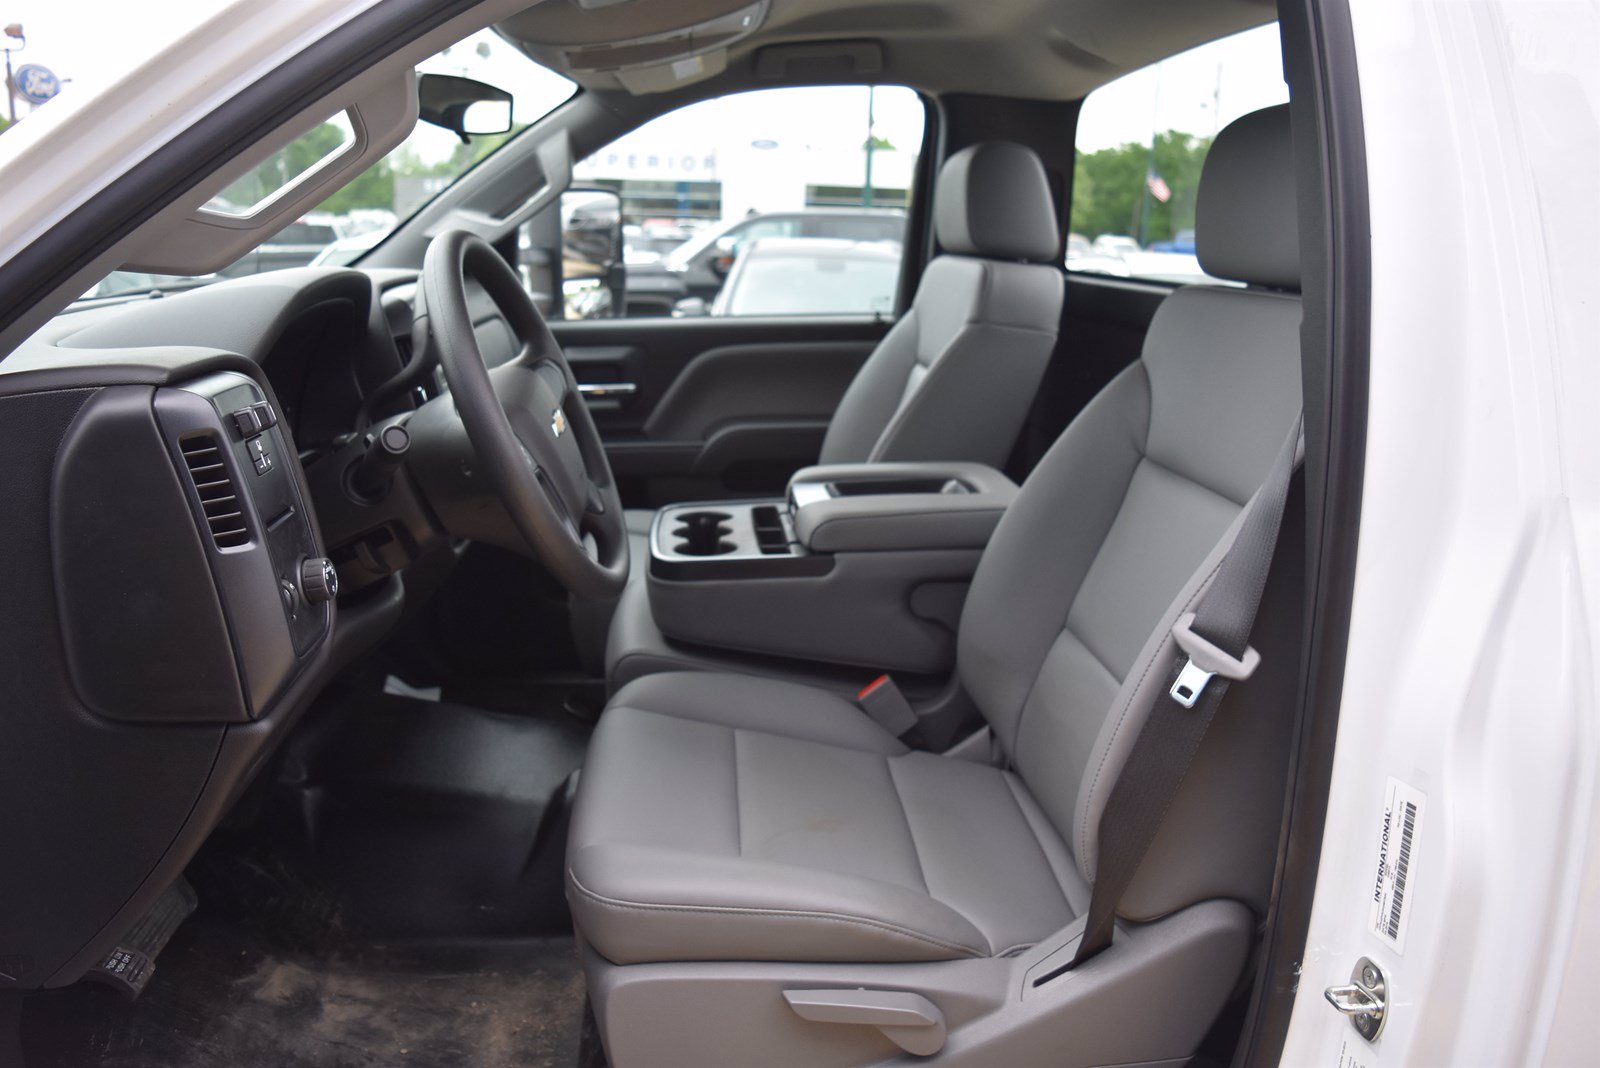 New 2019 Chevrolet Silverado MD Regular Cab Chassis-Cab Regular Cab